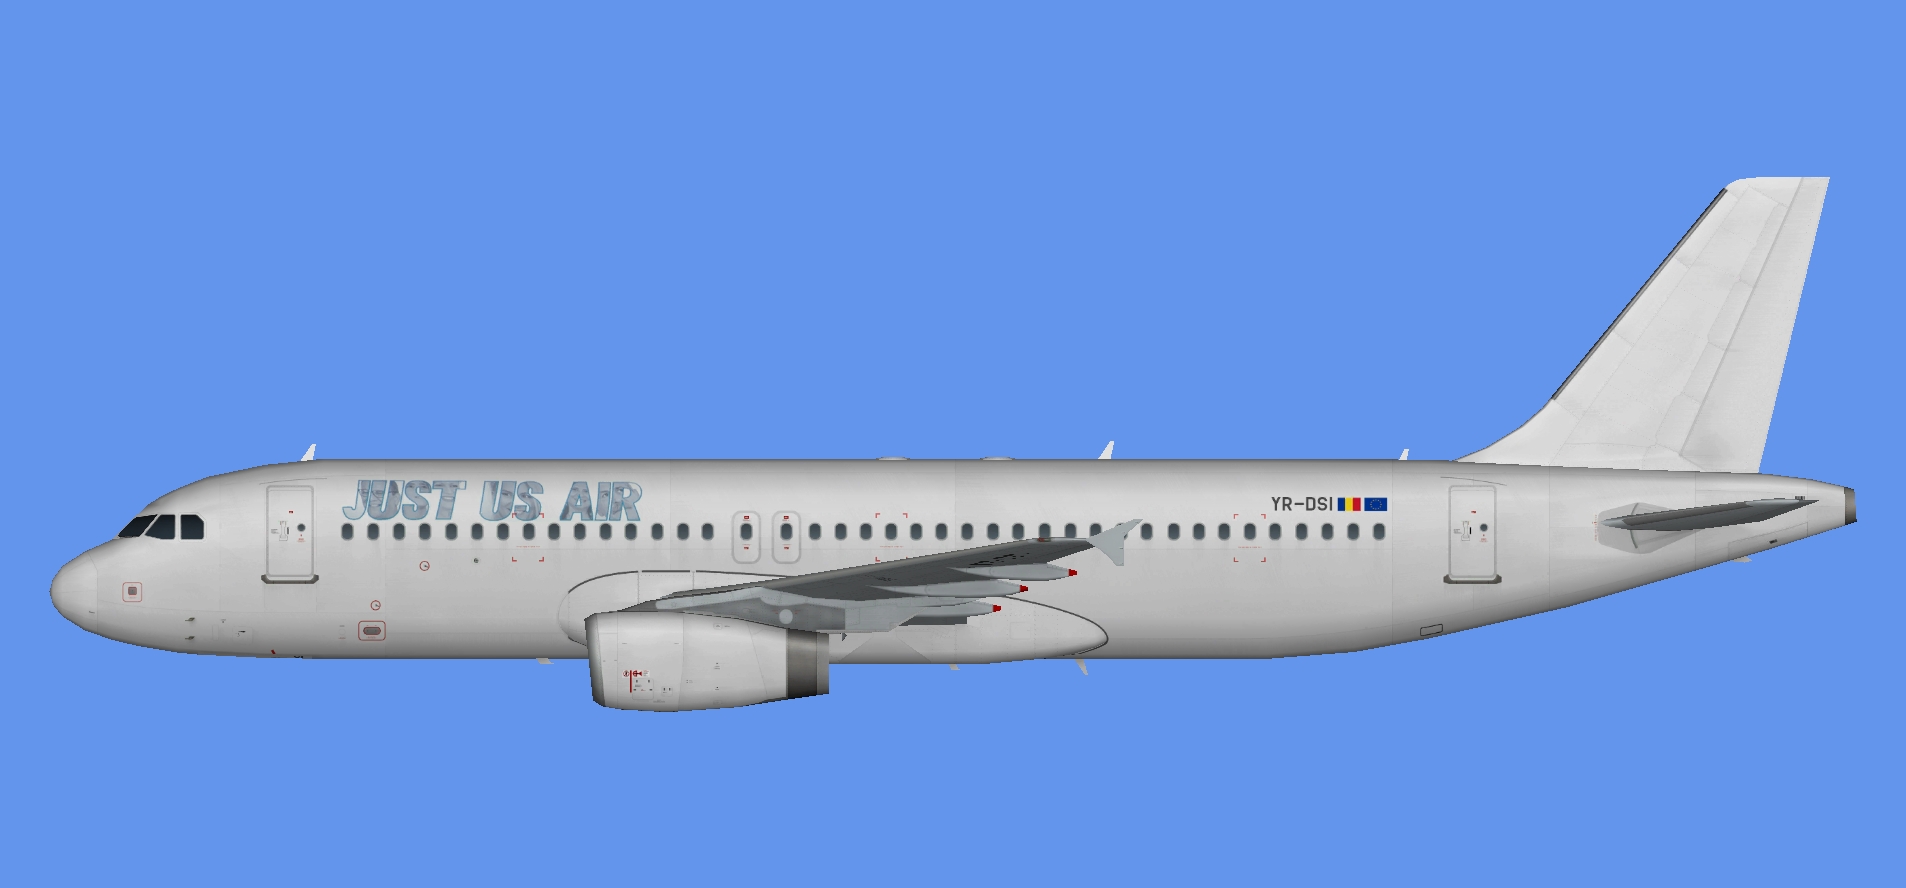 Just-Us Air Airbus A320